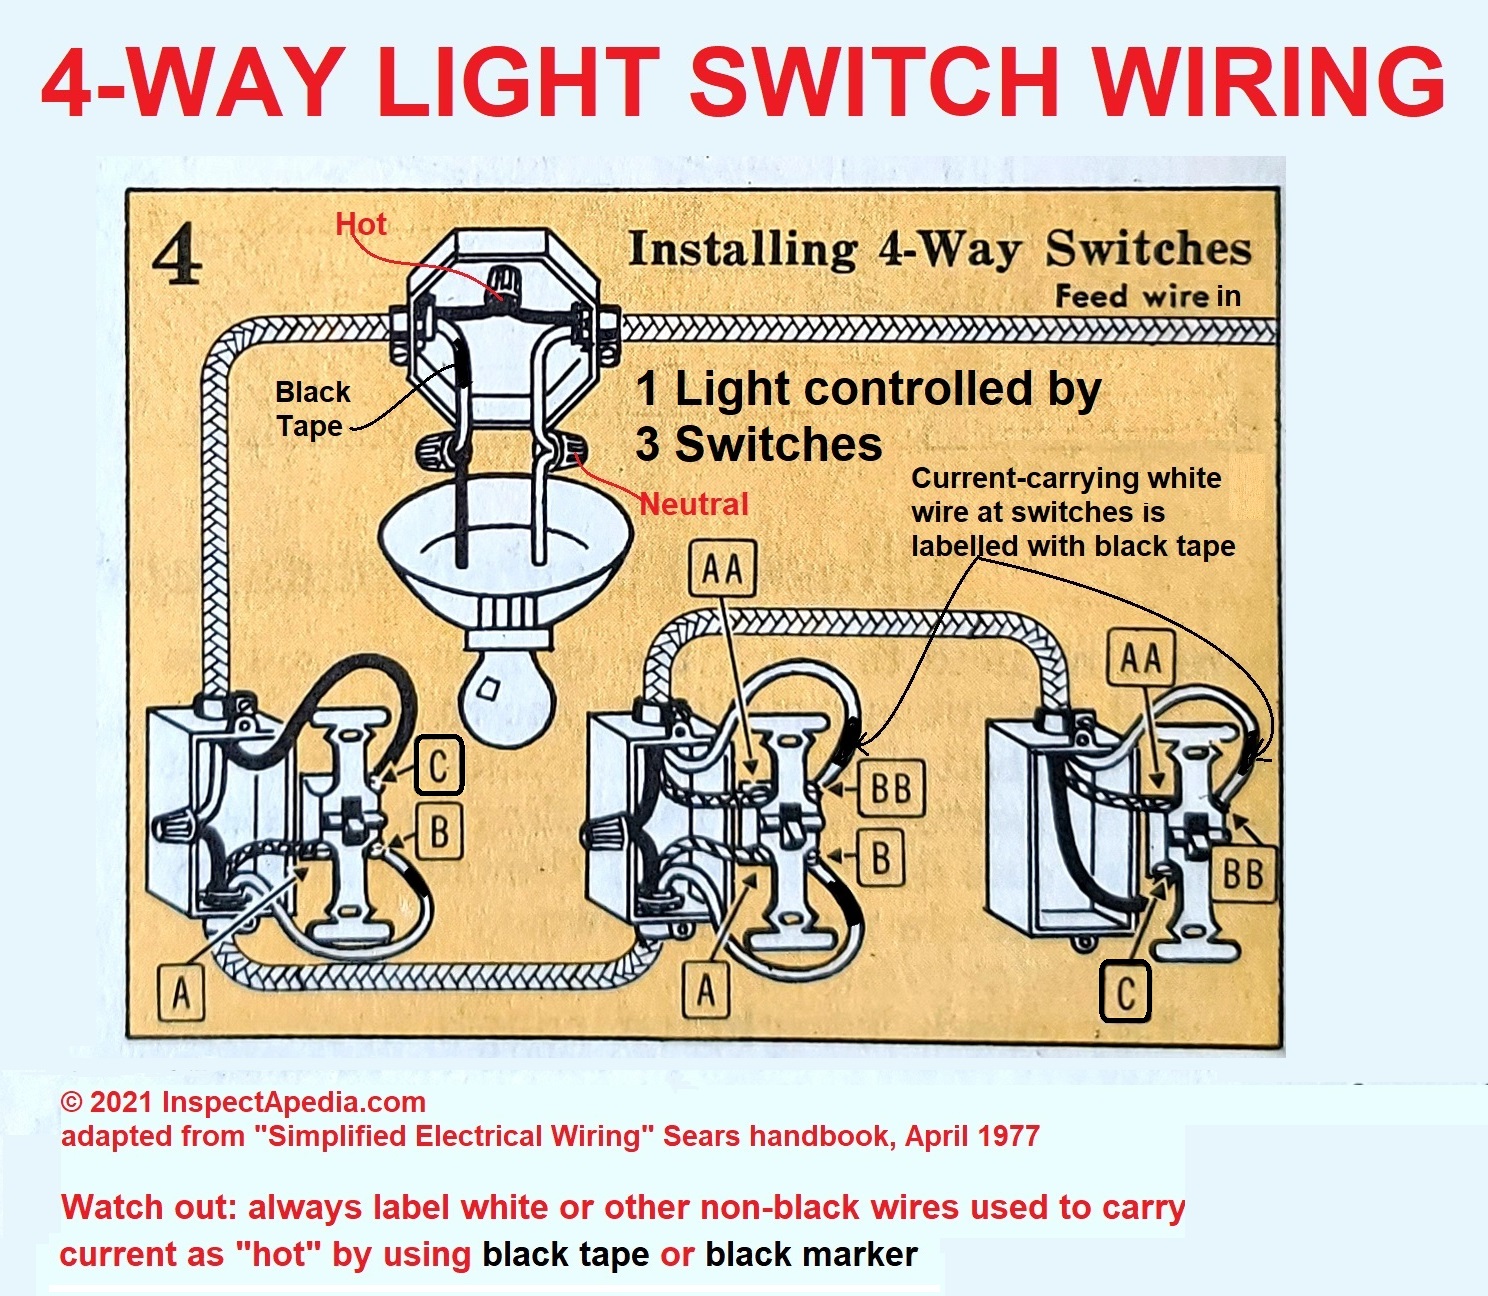 Light Switch Wiring